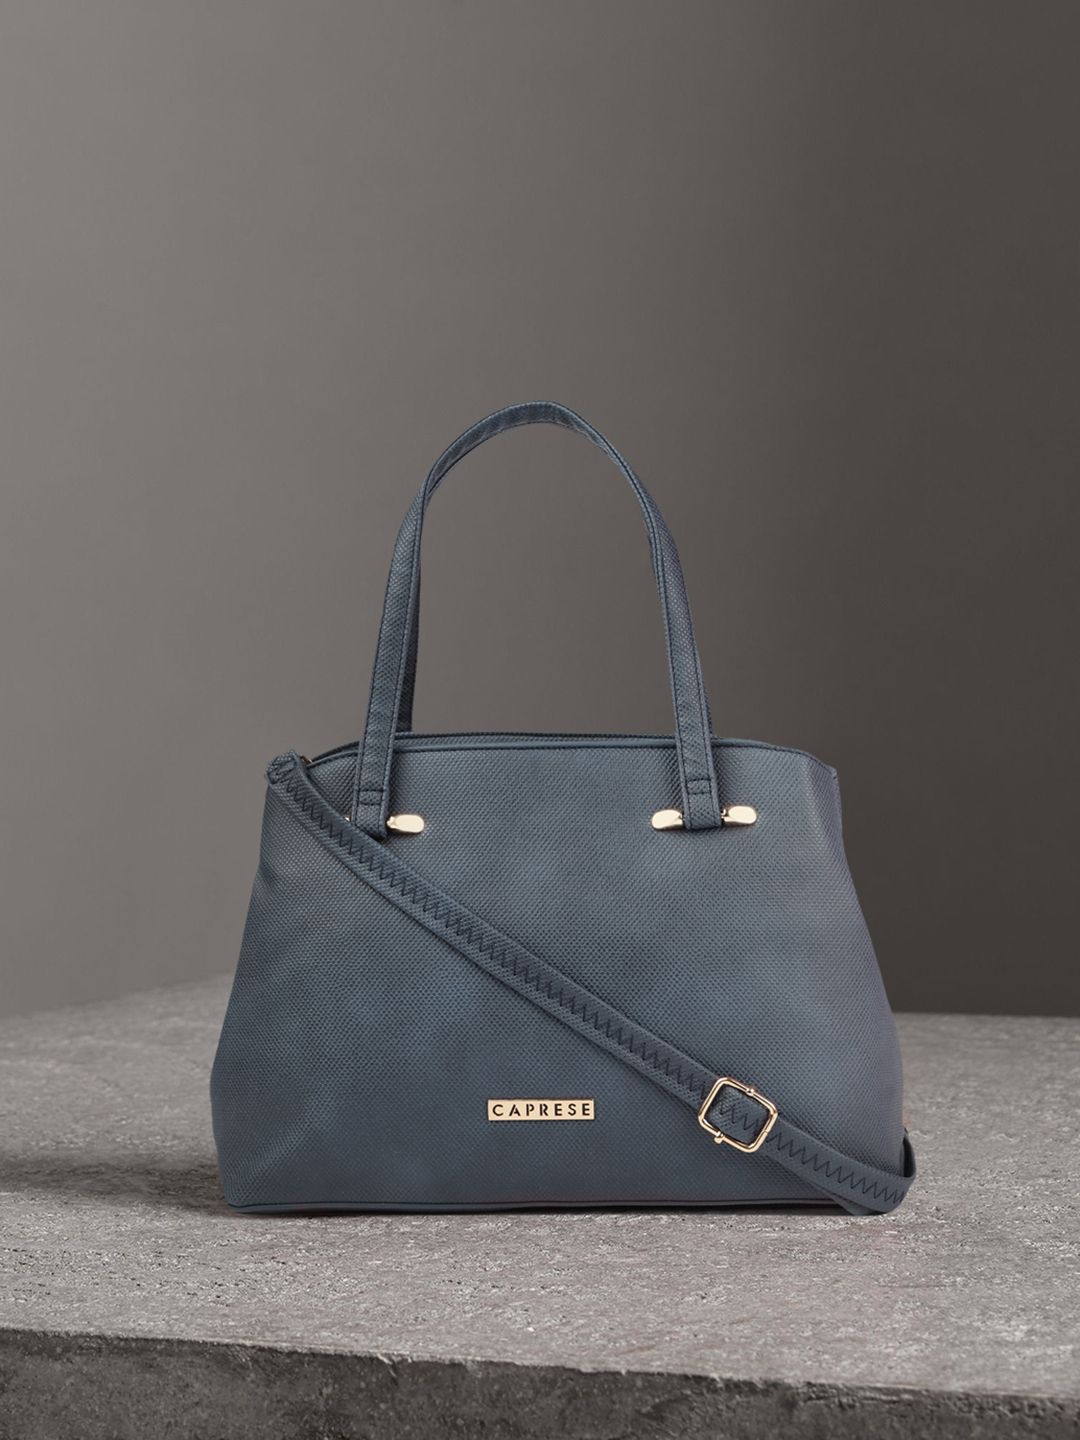 Caprese Blue Textured Handheld Bag Price in India